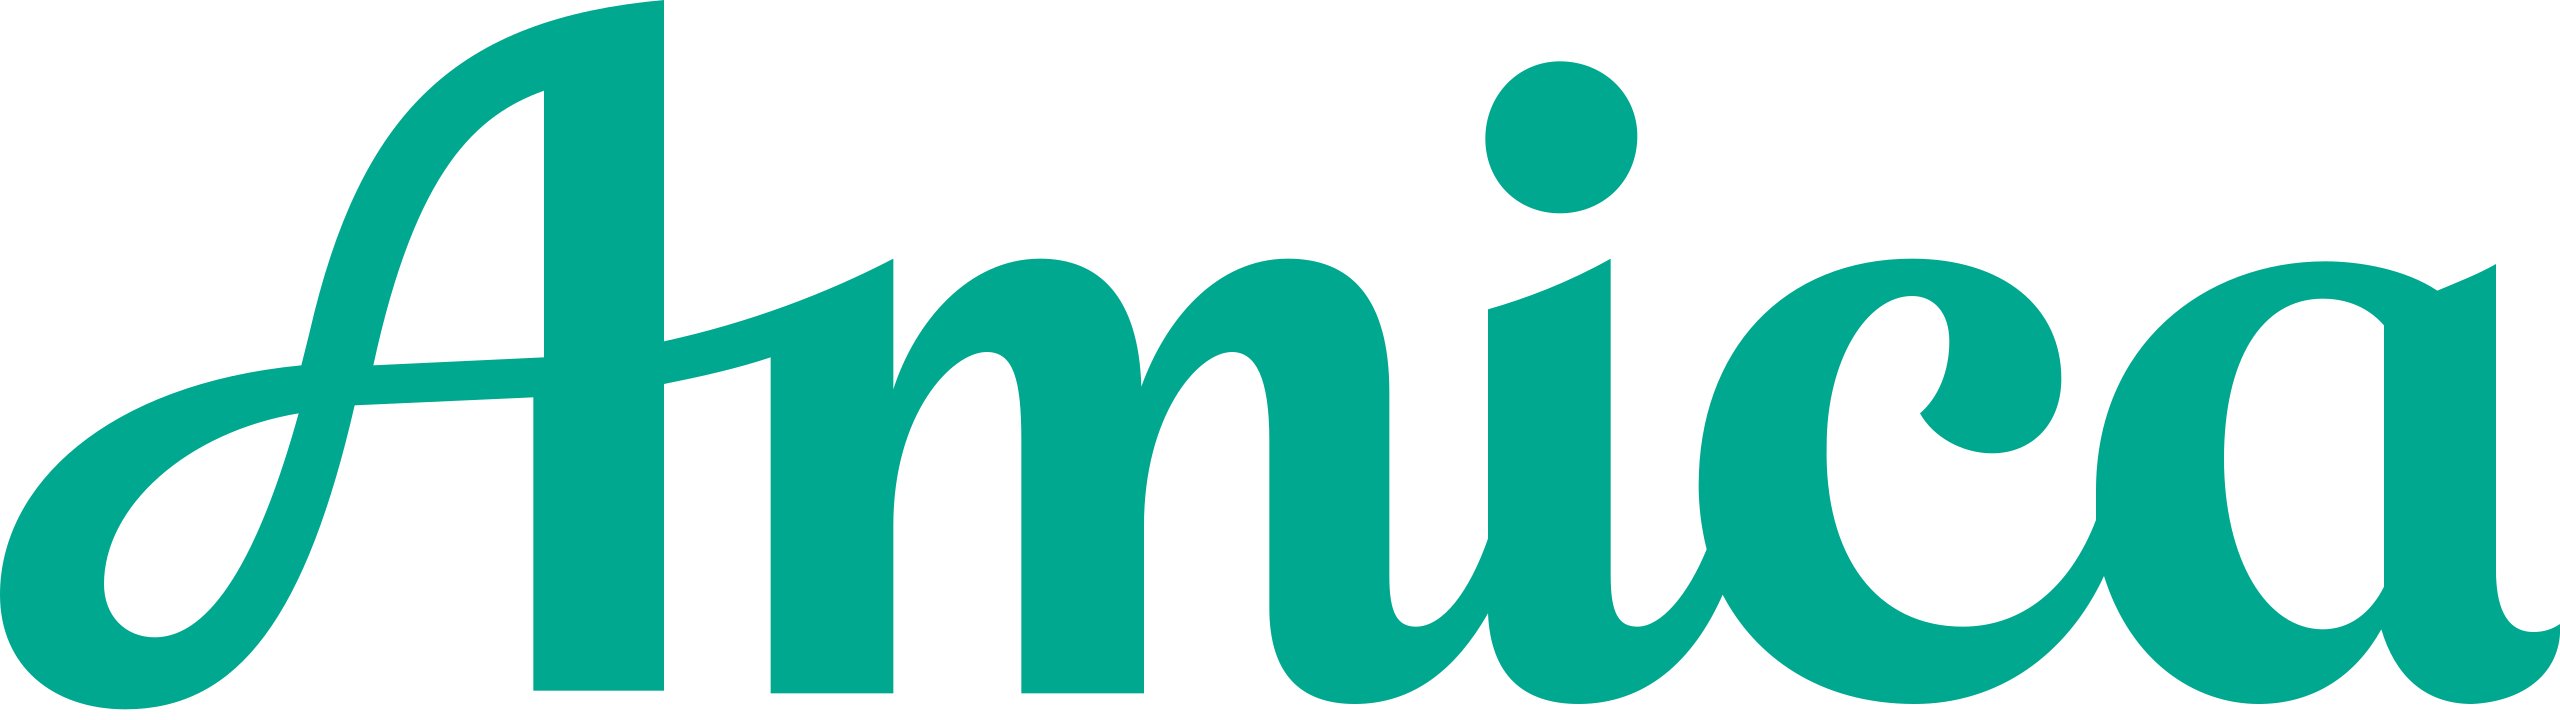 Logo for Amica